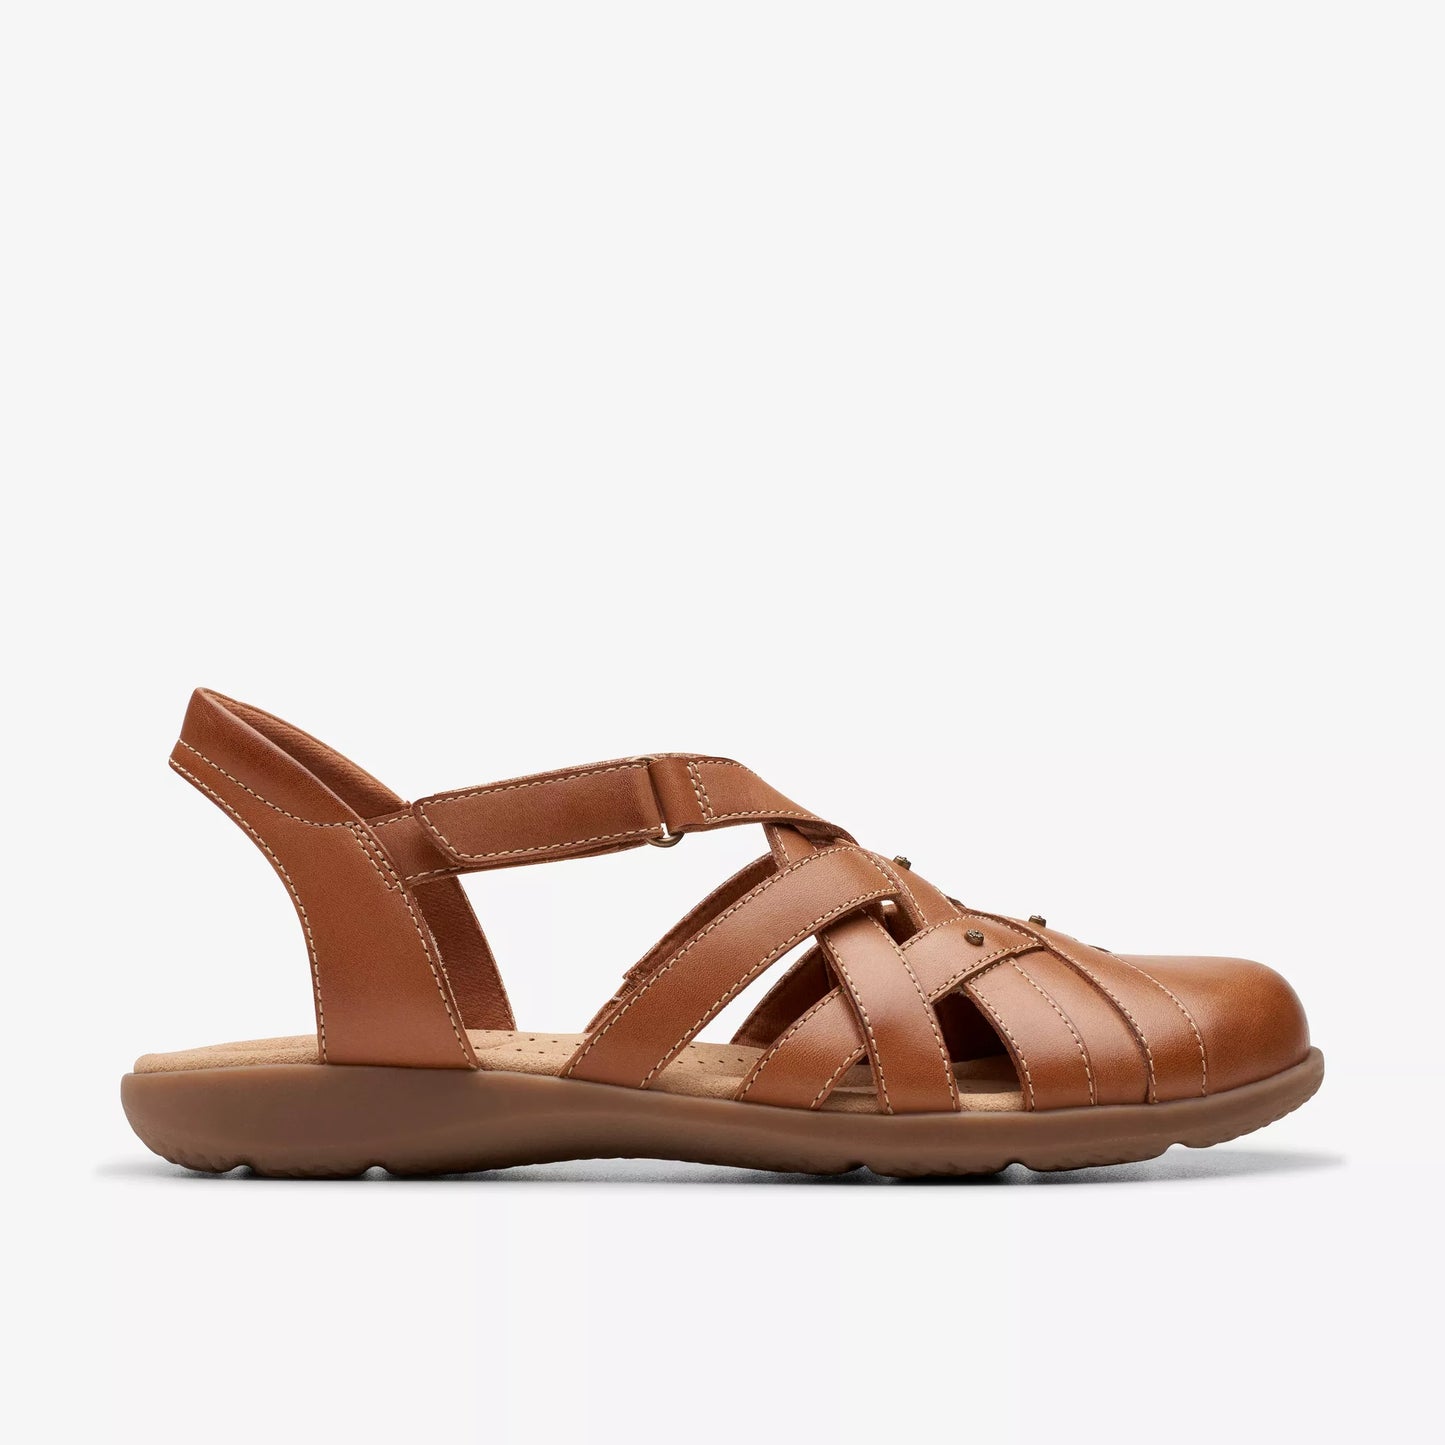 Clarks Women's Elizabelle Sea Sandals - Tan Leather